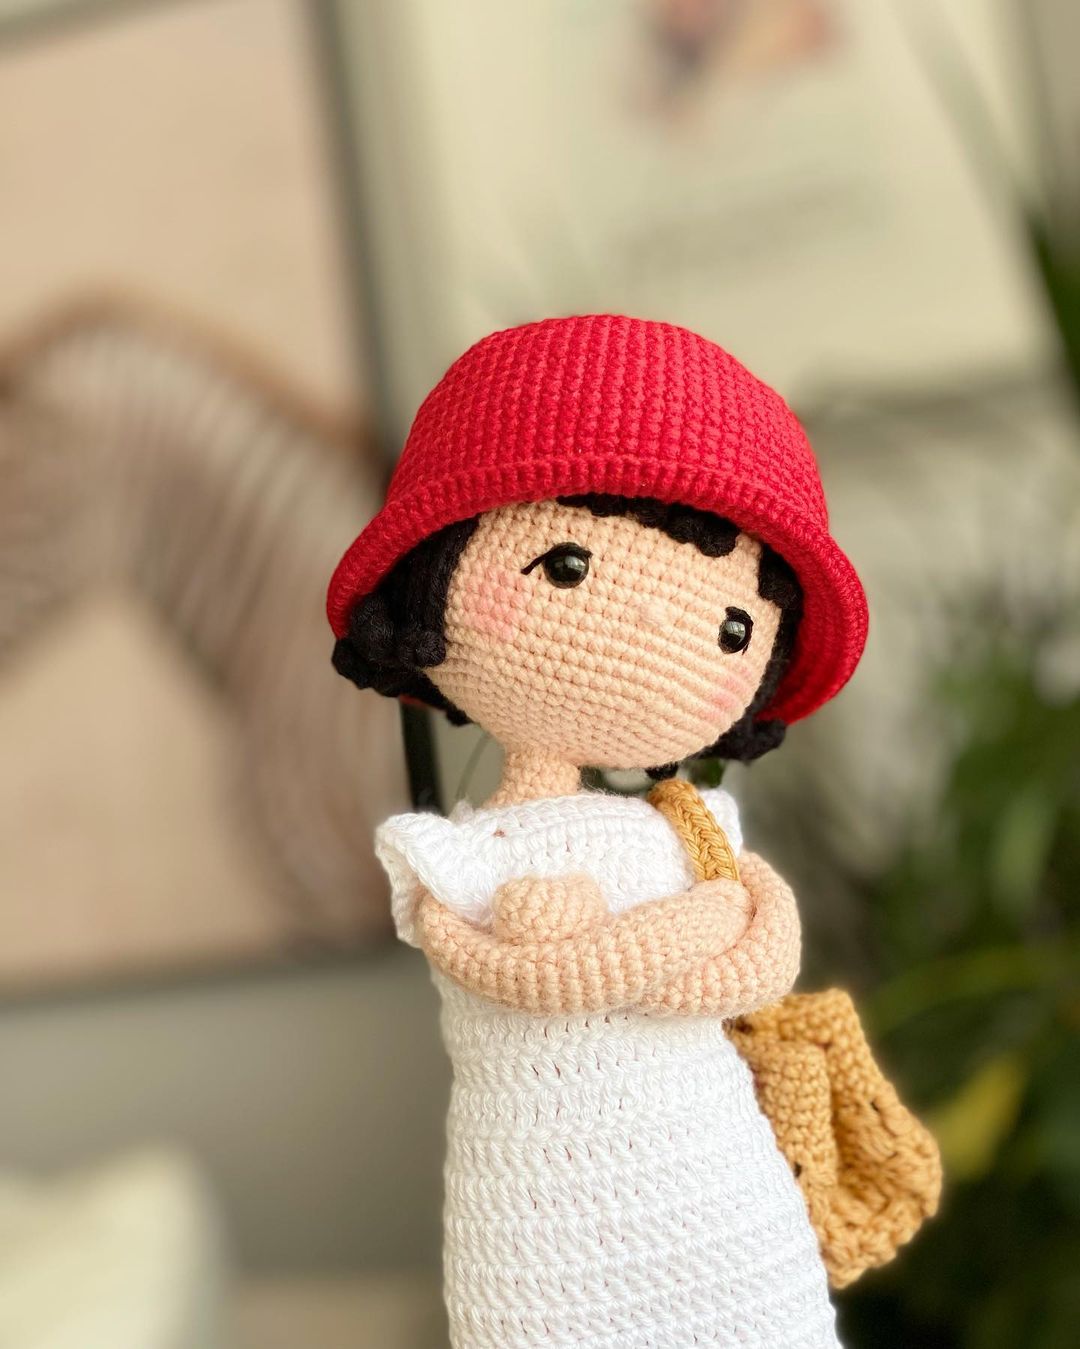 Crochet Cute Alissa Doll Amigurumi Free Pattern – Free Amigurumi